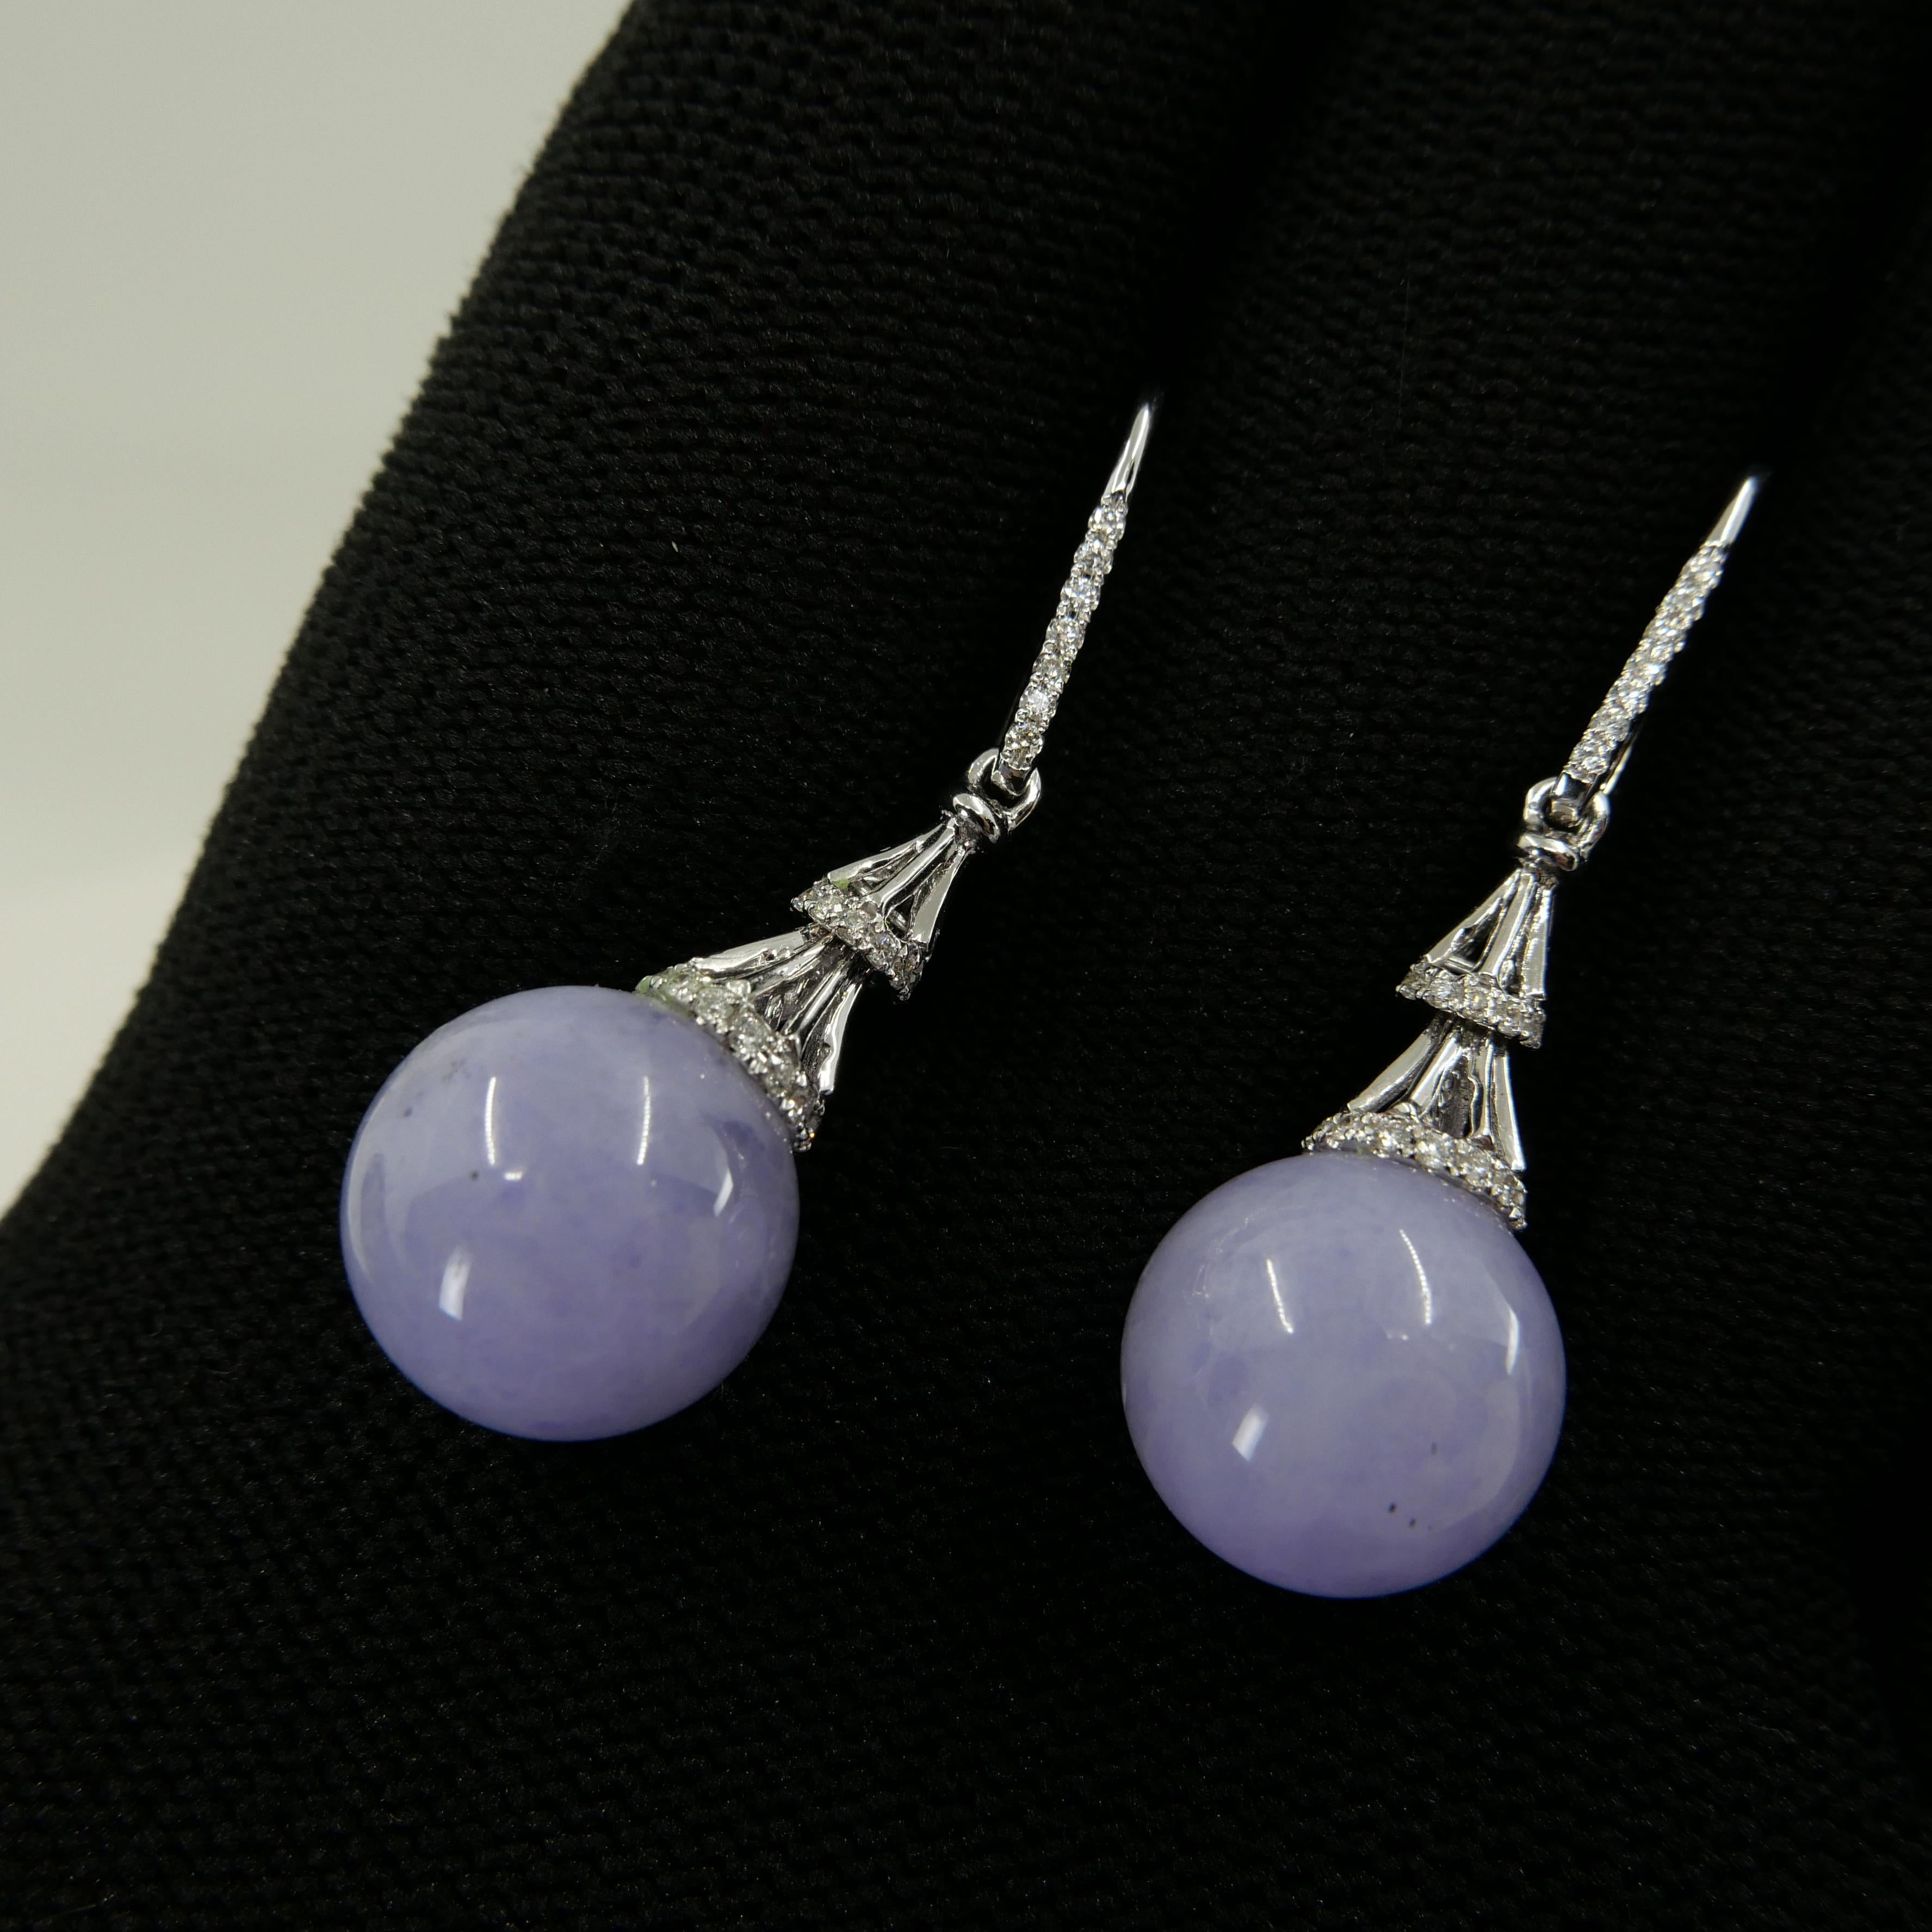 Certified Natural Lavender Jade Beads & Diamond Drop Earrings. Exquisite. 4